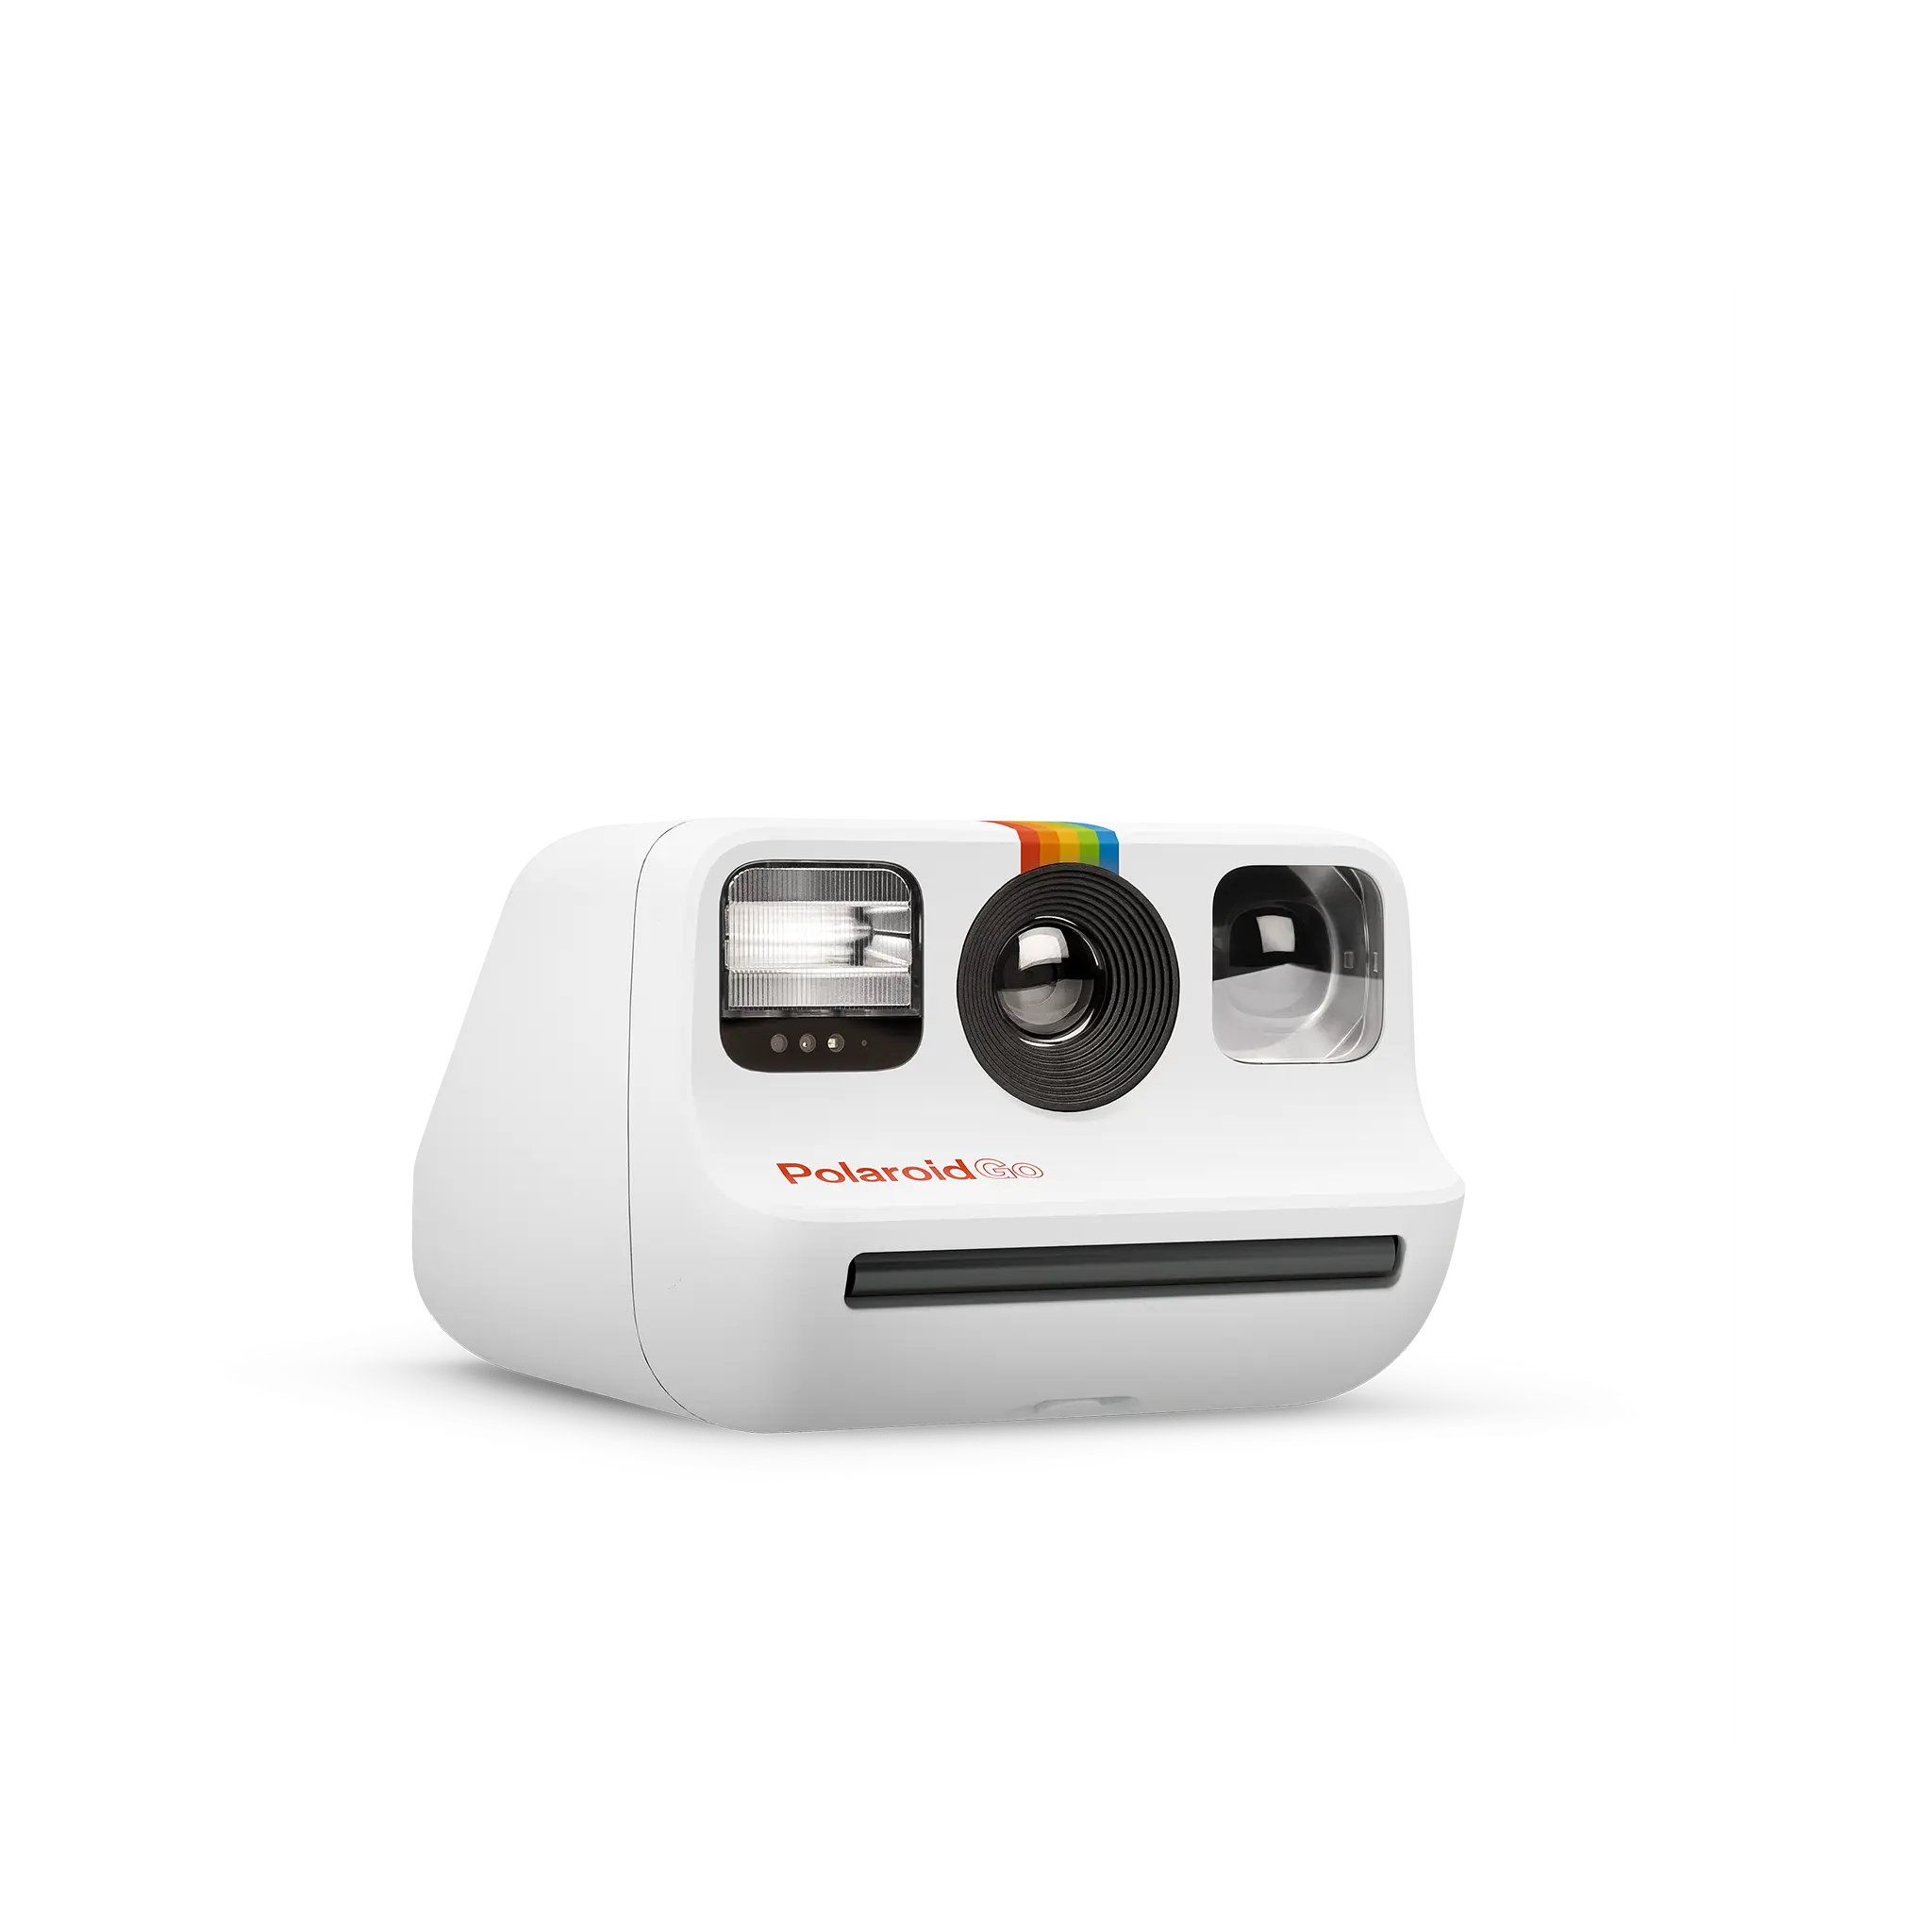 Polaroid I-2 Instant Camera analog camera – OSTSOME